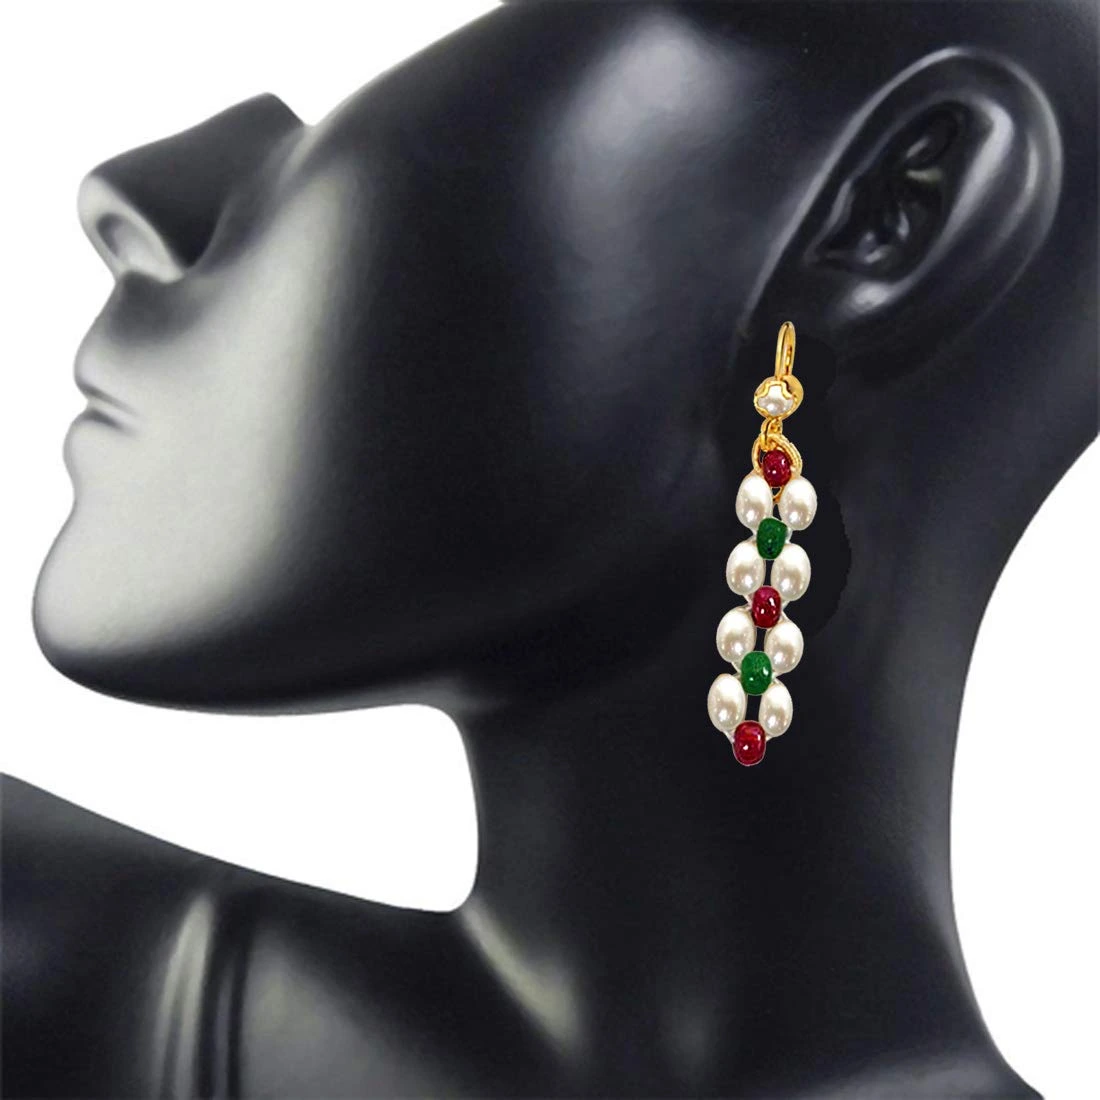 Dangling Rice Pearl, Ruby & Emerald Beads Earrings for Women (SE124)